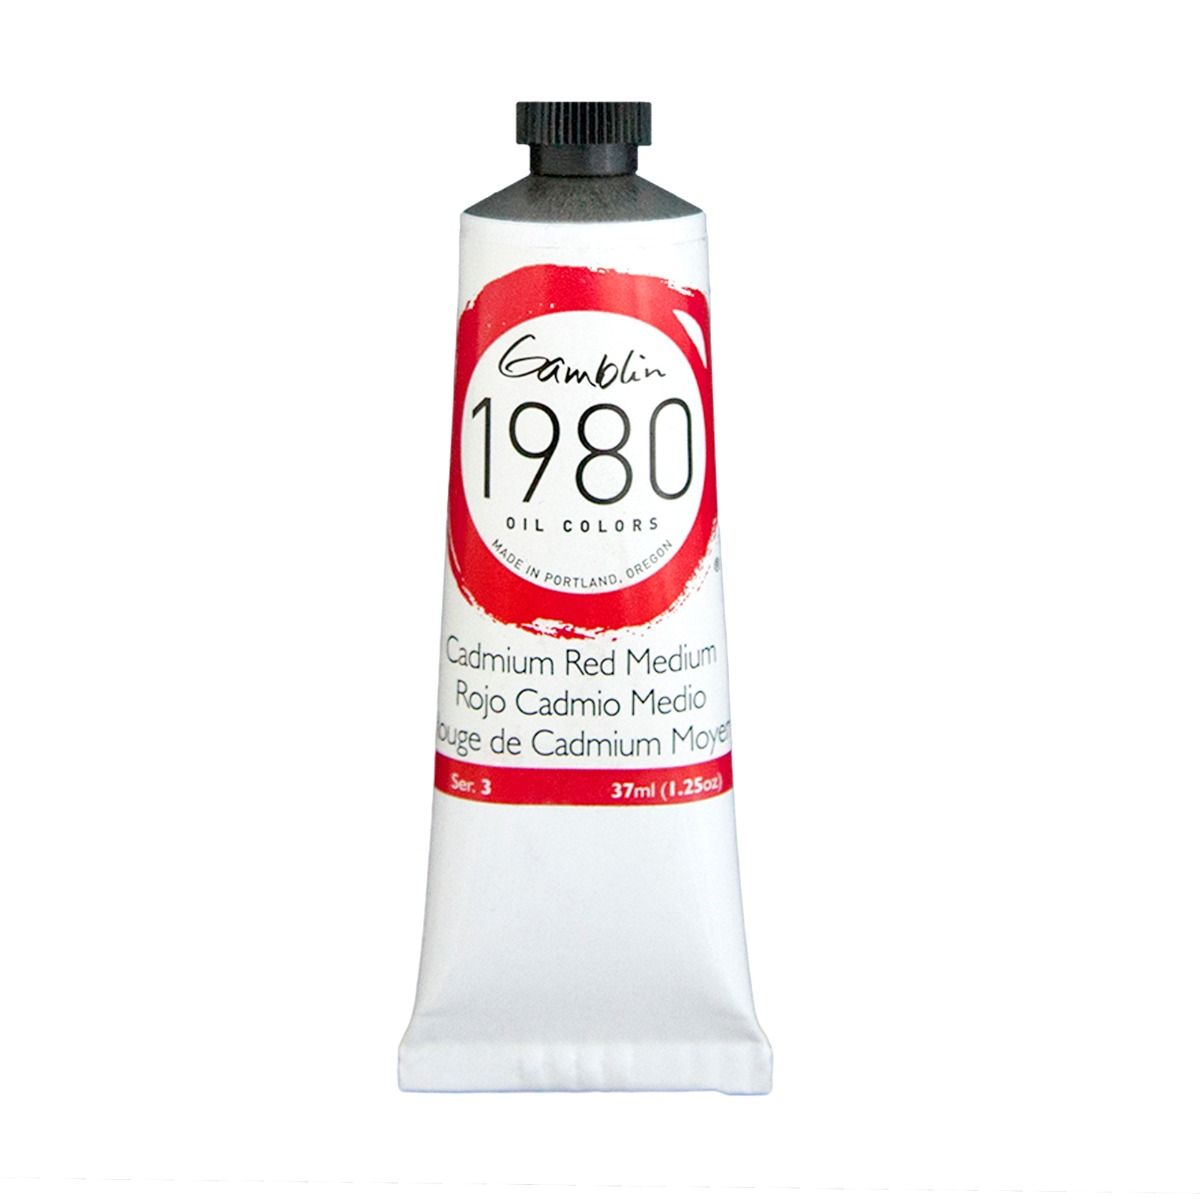 Gamblin 1980 Oils - Cadmium Red Medium, 37 ml (1.25oz)